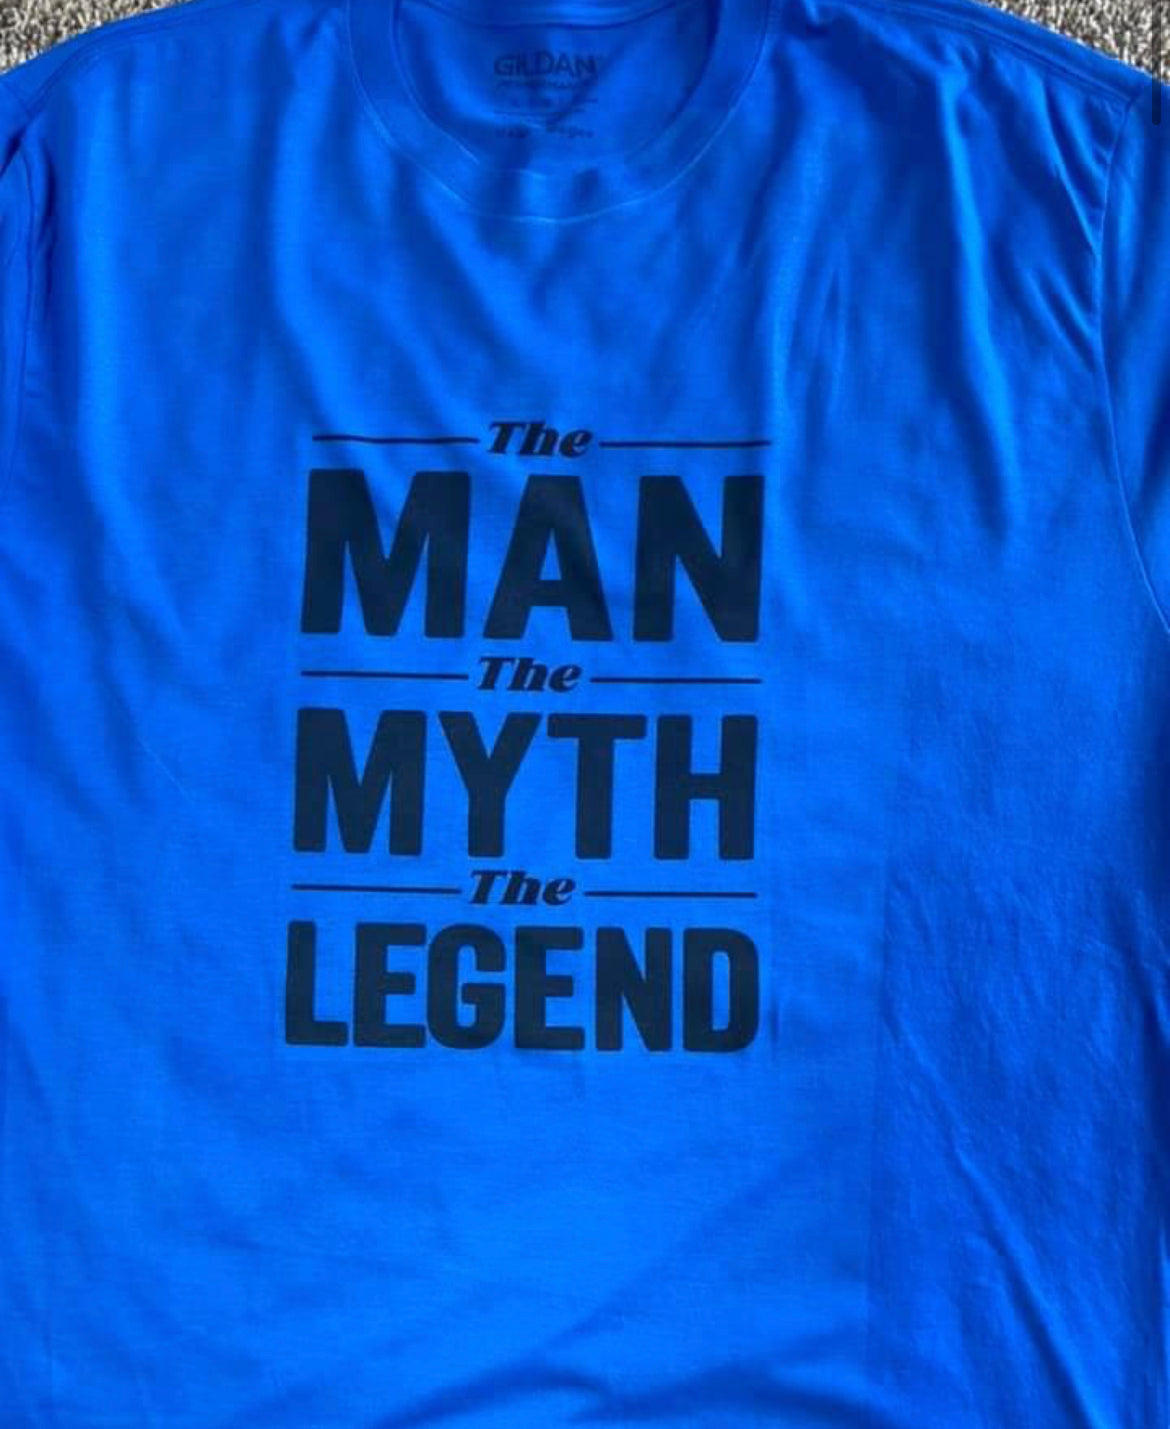 The Man, the Myth, the Legend